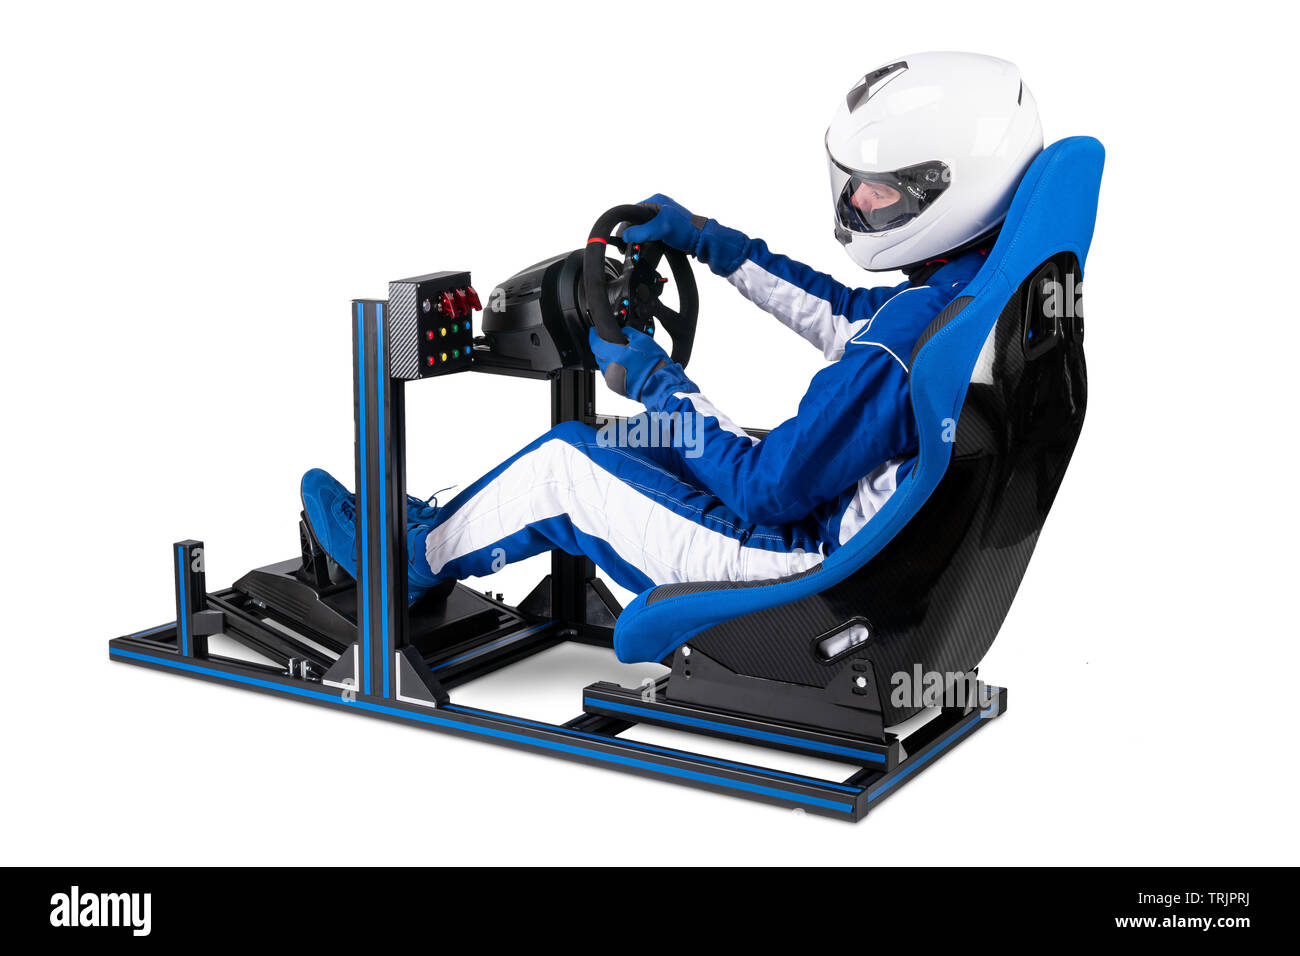 https://c8.alamy.com/compde/trjprj/race-driver-in-blau-insgesamt-mit-helm-das-auf-simracing-aluminium-simulator-rig-fur-video-spiel-racing-motorsport-auto-schalensitz-lenkrad-p-trjprj.jpg